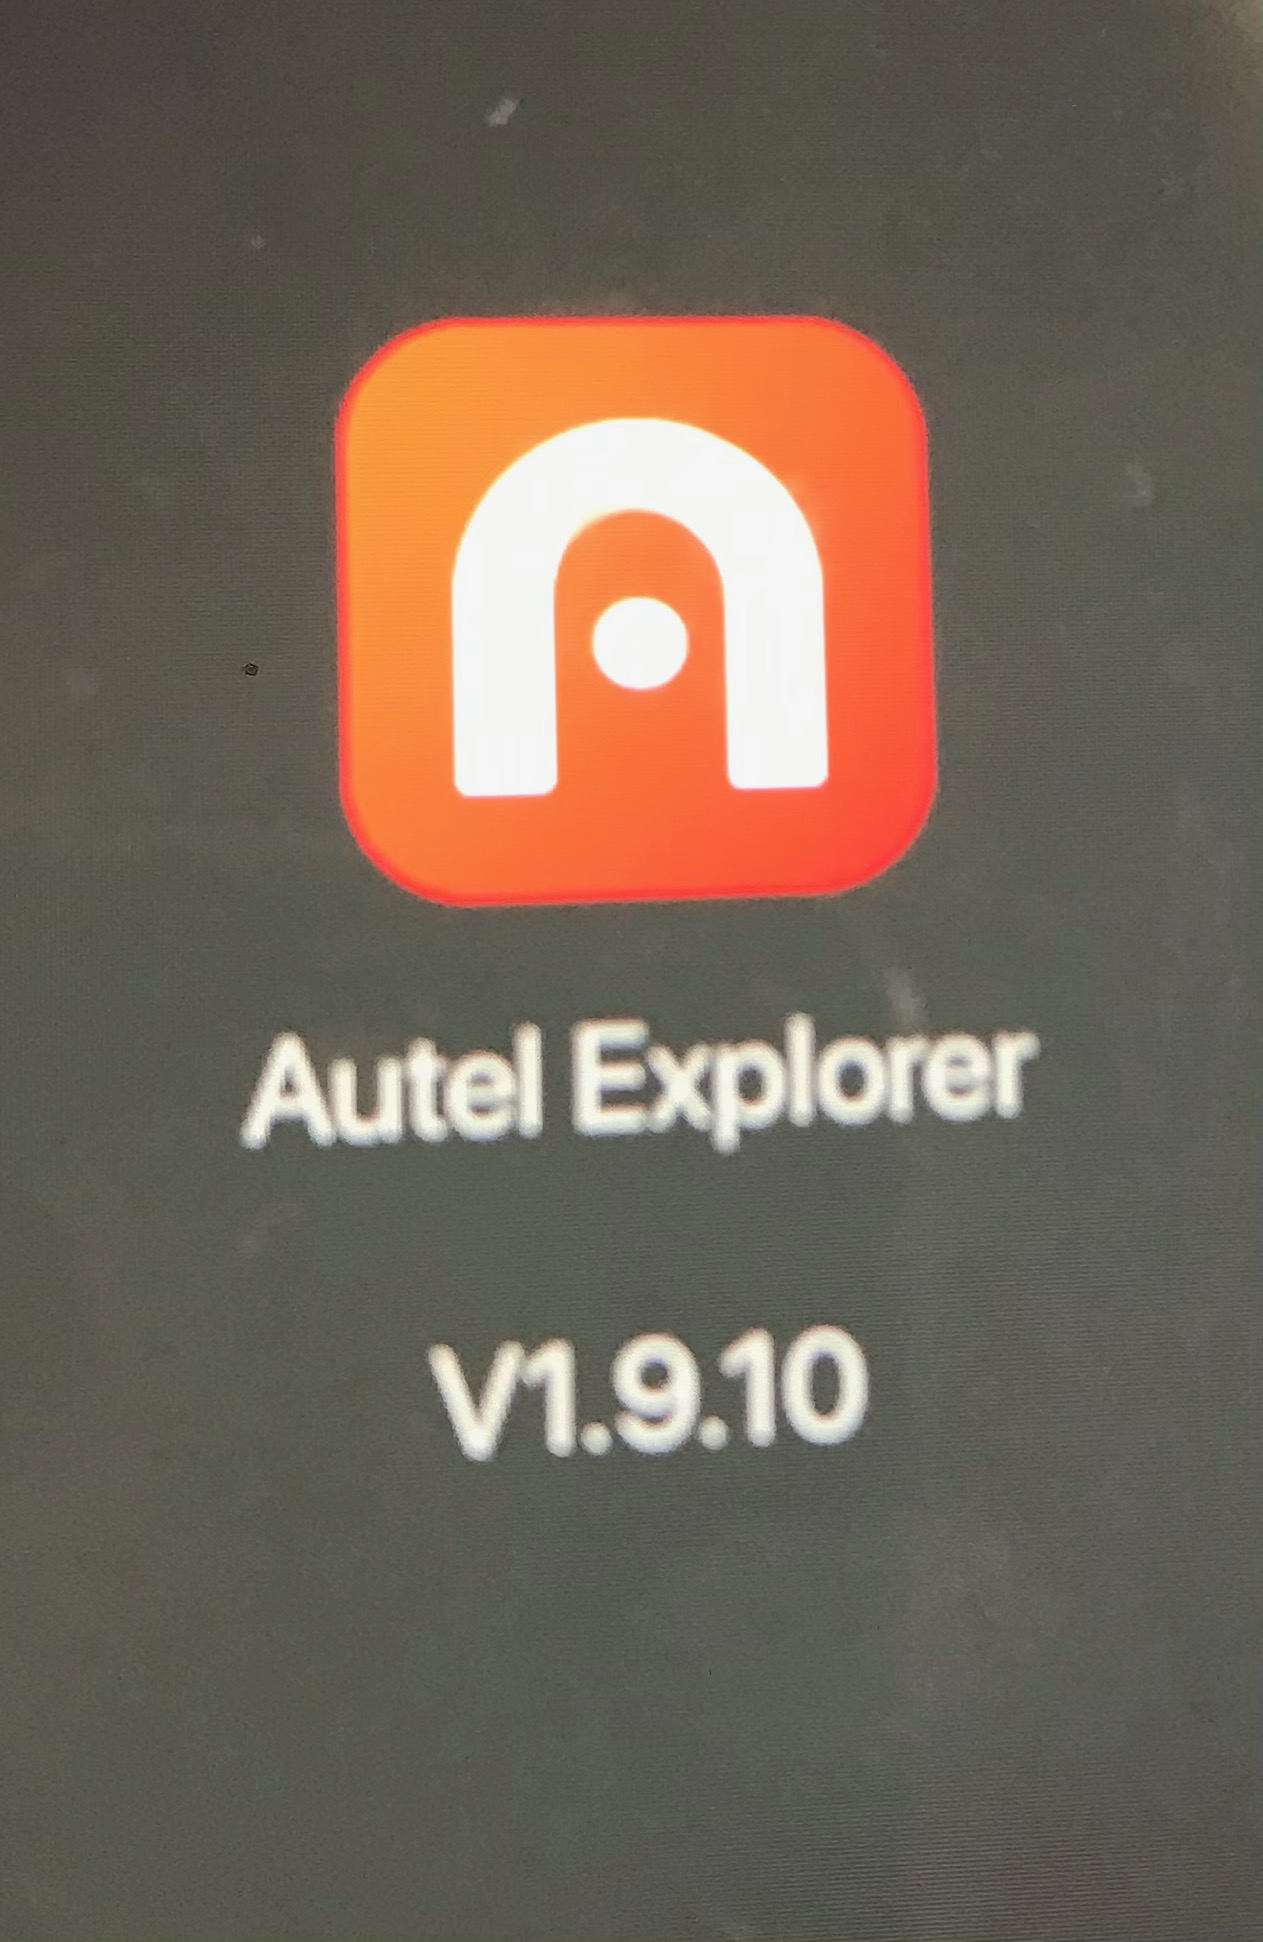 Autel Explorer日本語